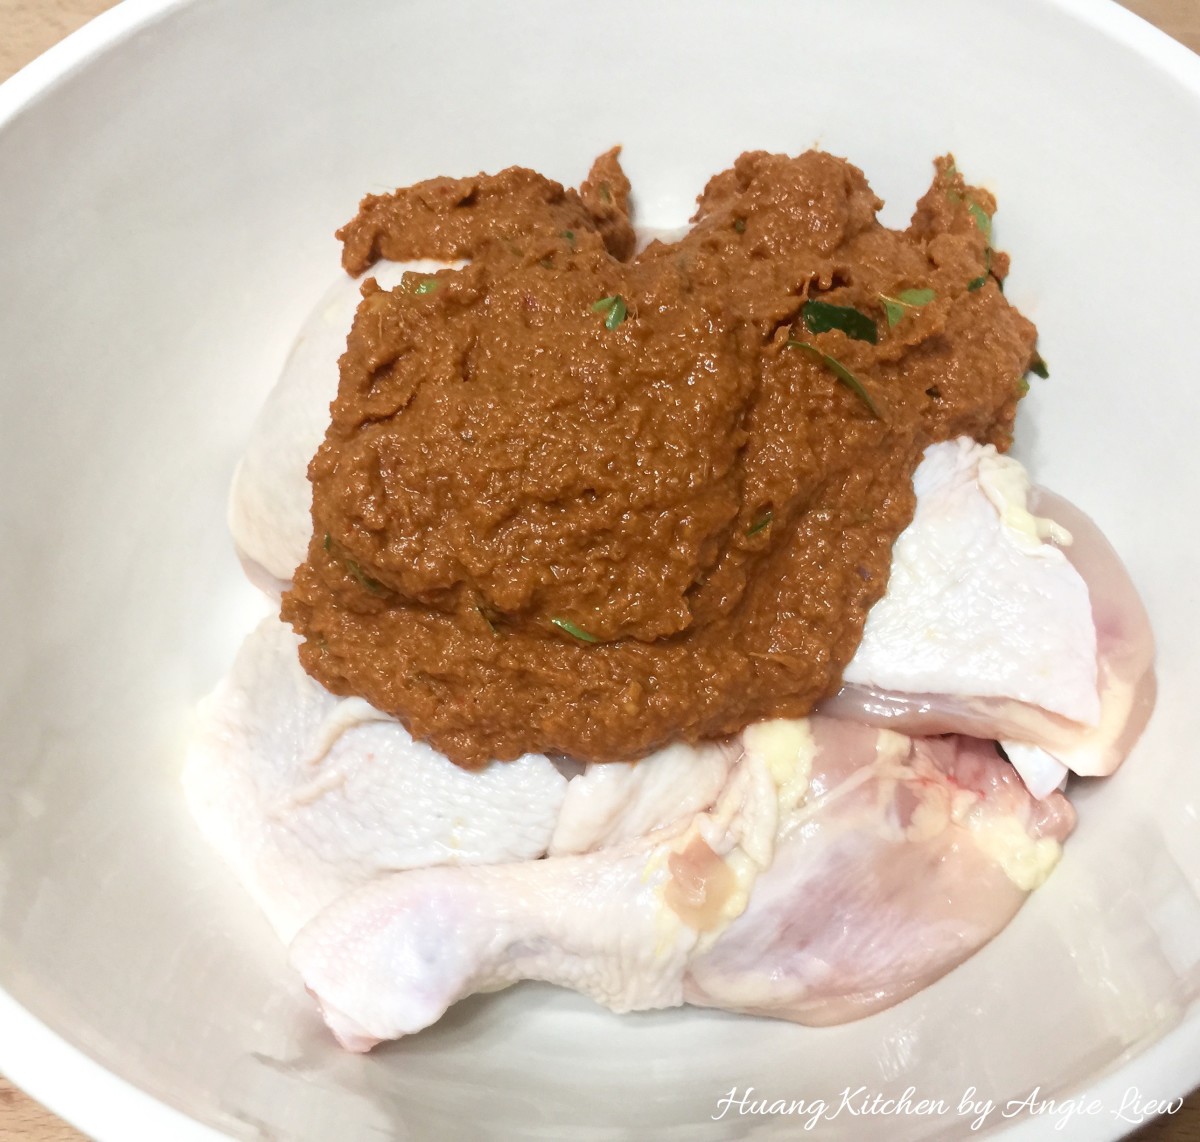 Ayam Goreng Berempah Recipe (Malay Spiced Fried Chicken) - mix spice chicken